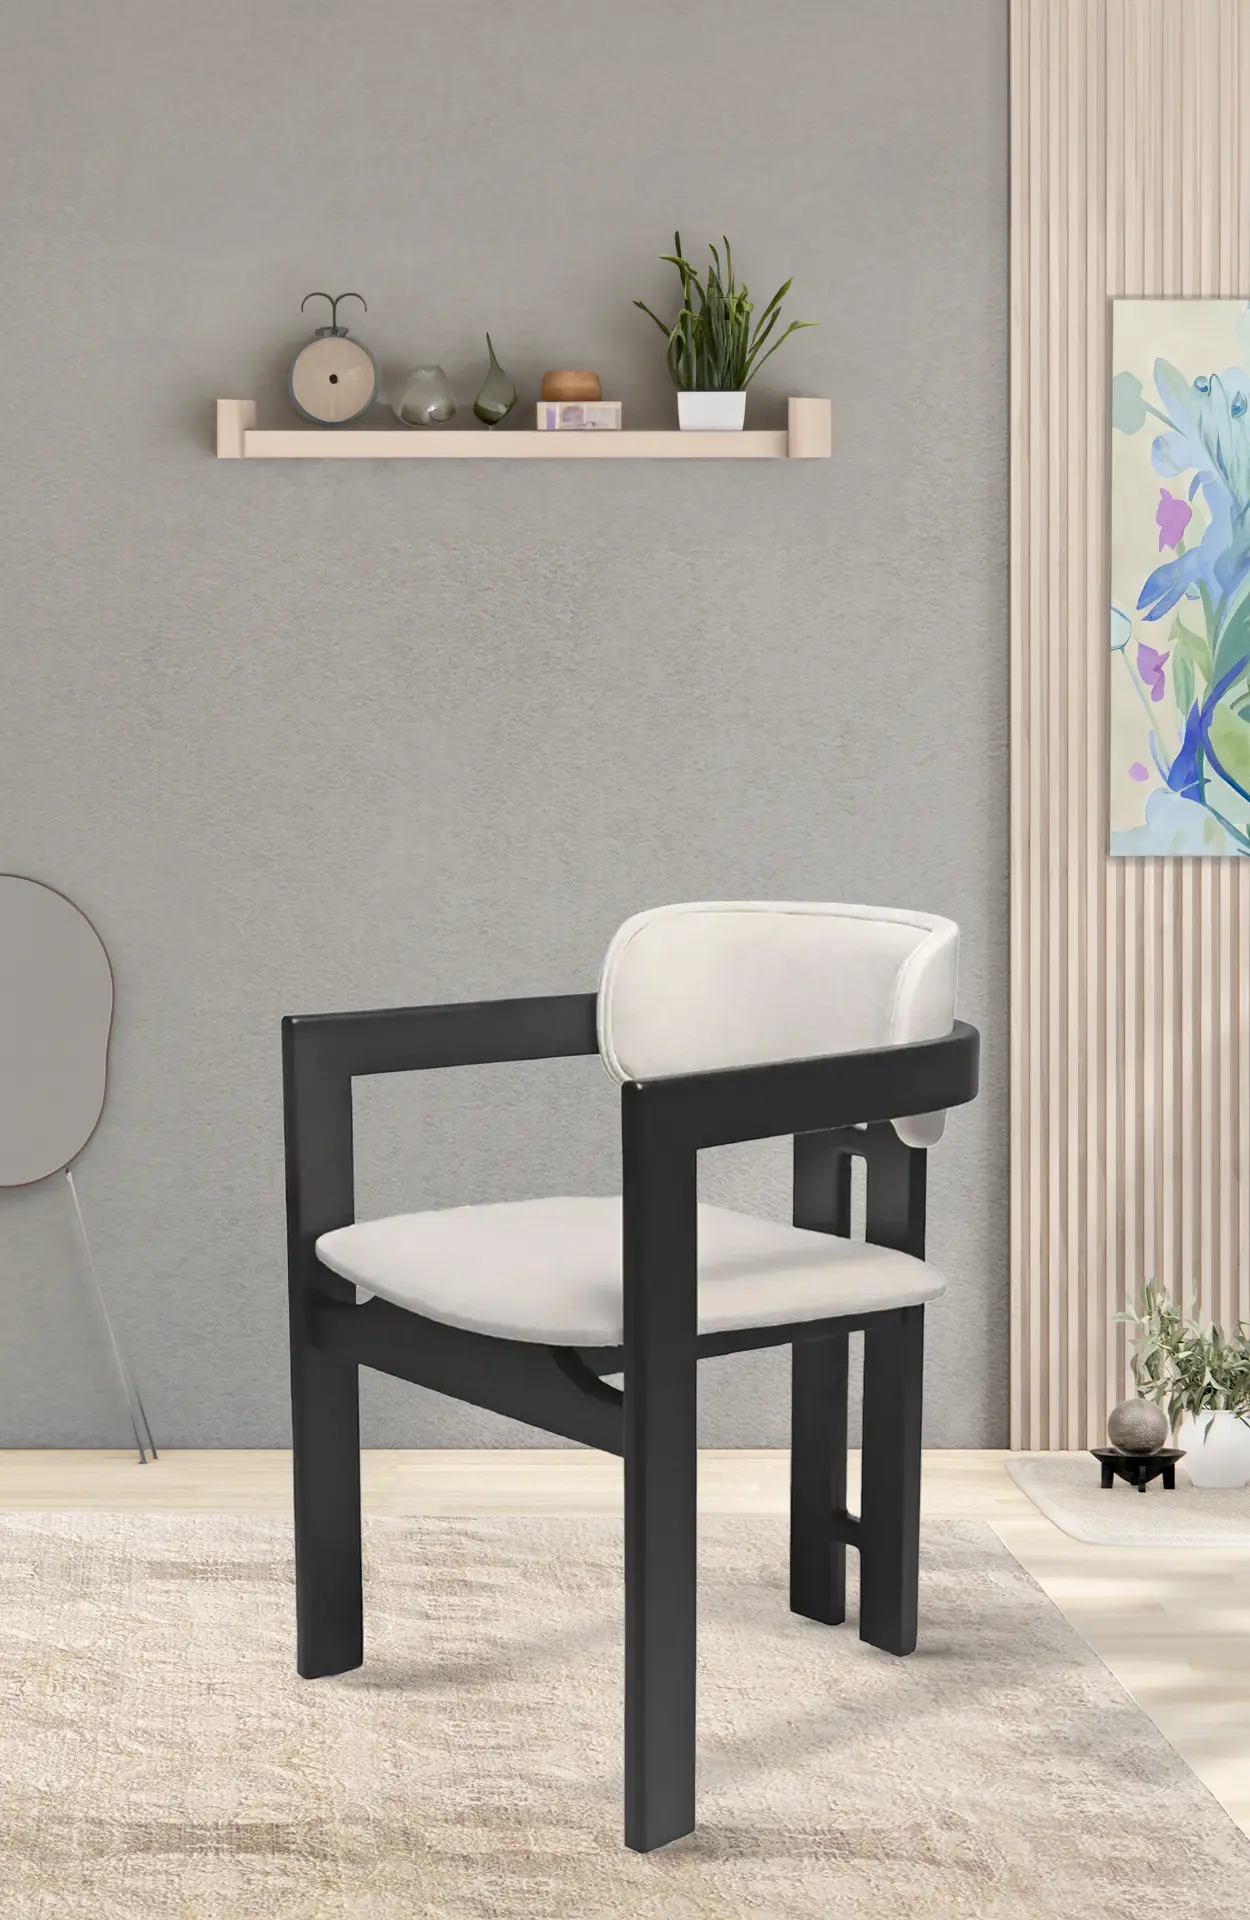 Laholm Wooden Chair Dining Room Scandinavian Design